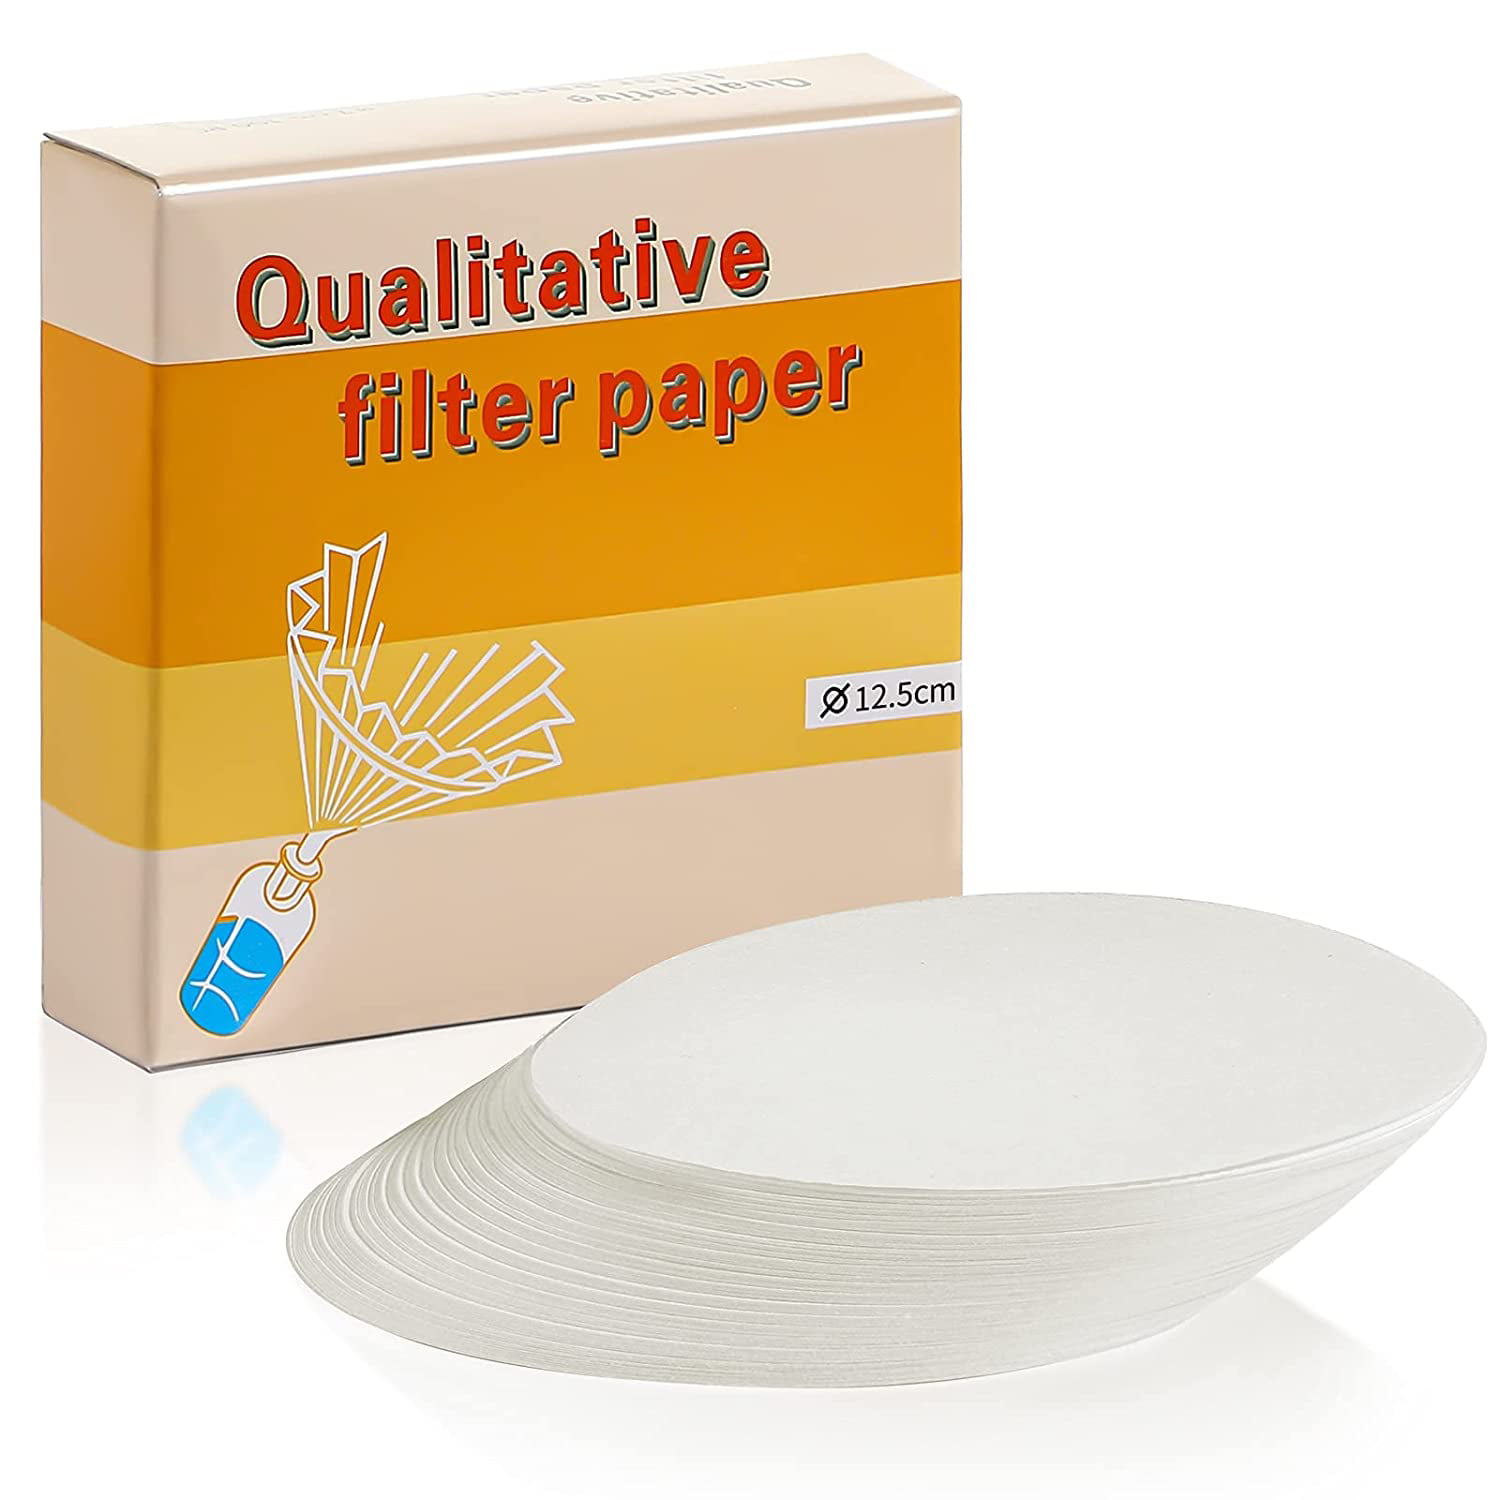 Qualitative Filter Paper 11cm Diameter with Medium Filtration Speed Pack of 100 